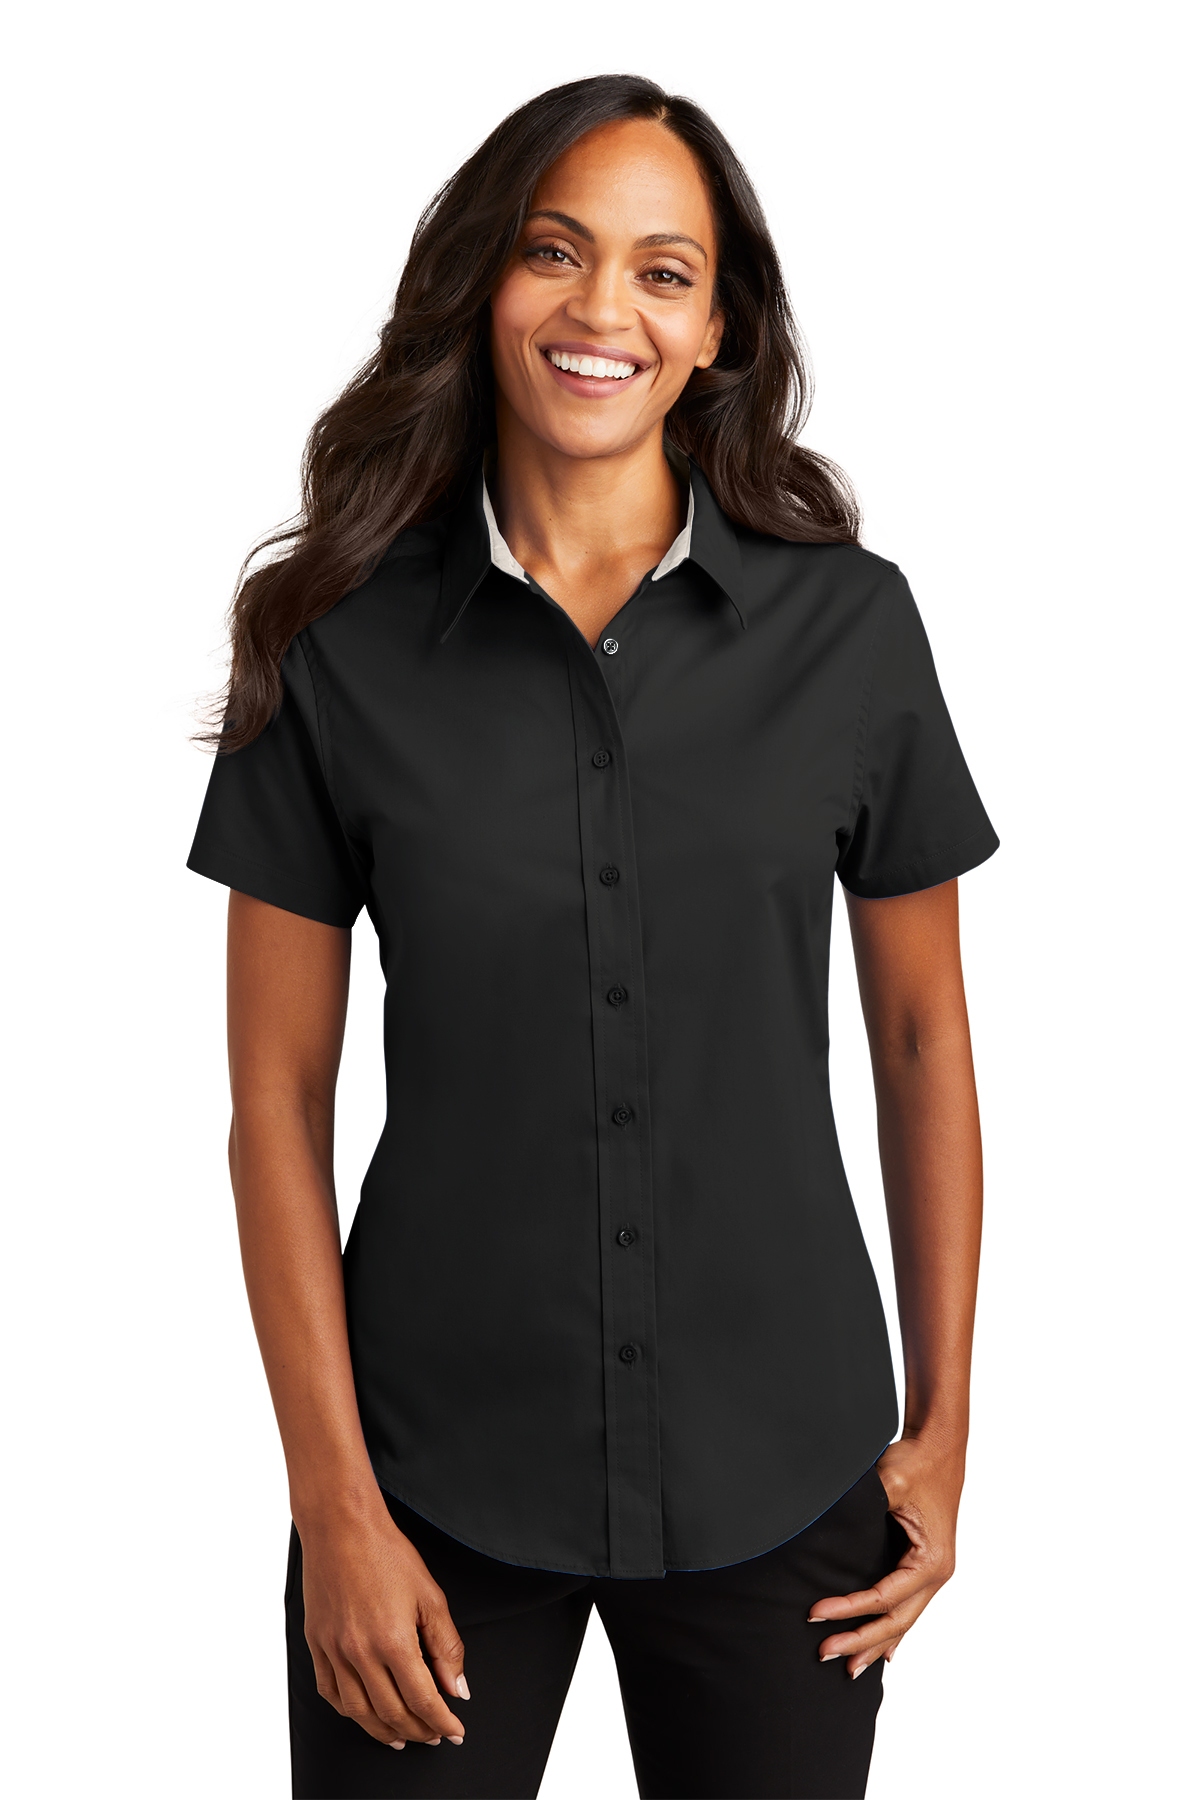 Care Port | Authority Ladies Port Shirt Short Product Sleeve Easy Authority |